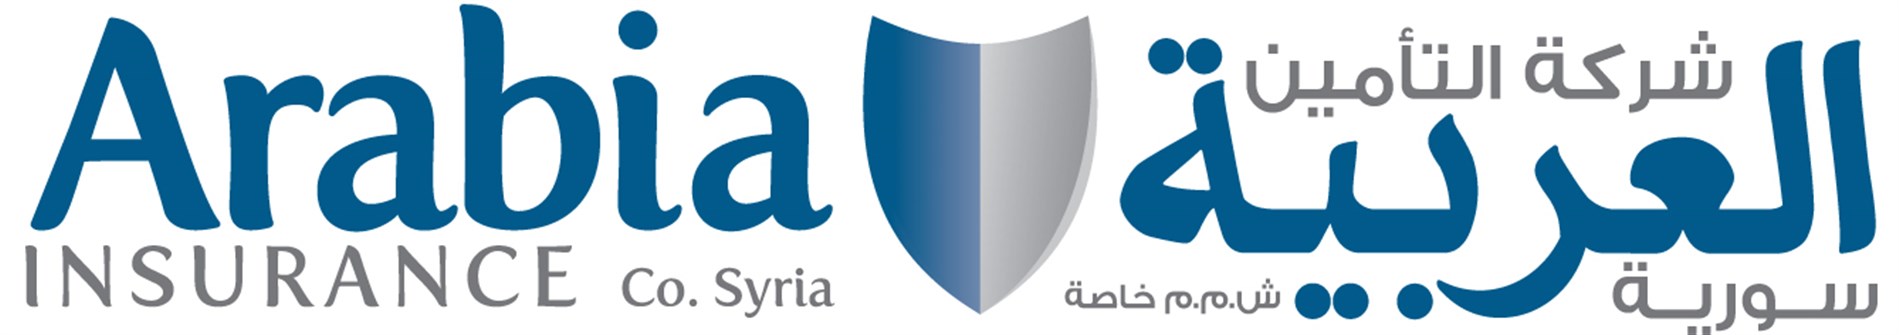 Arabia Insurance Co. Syria